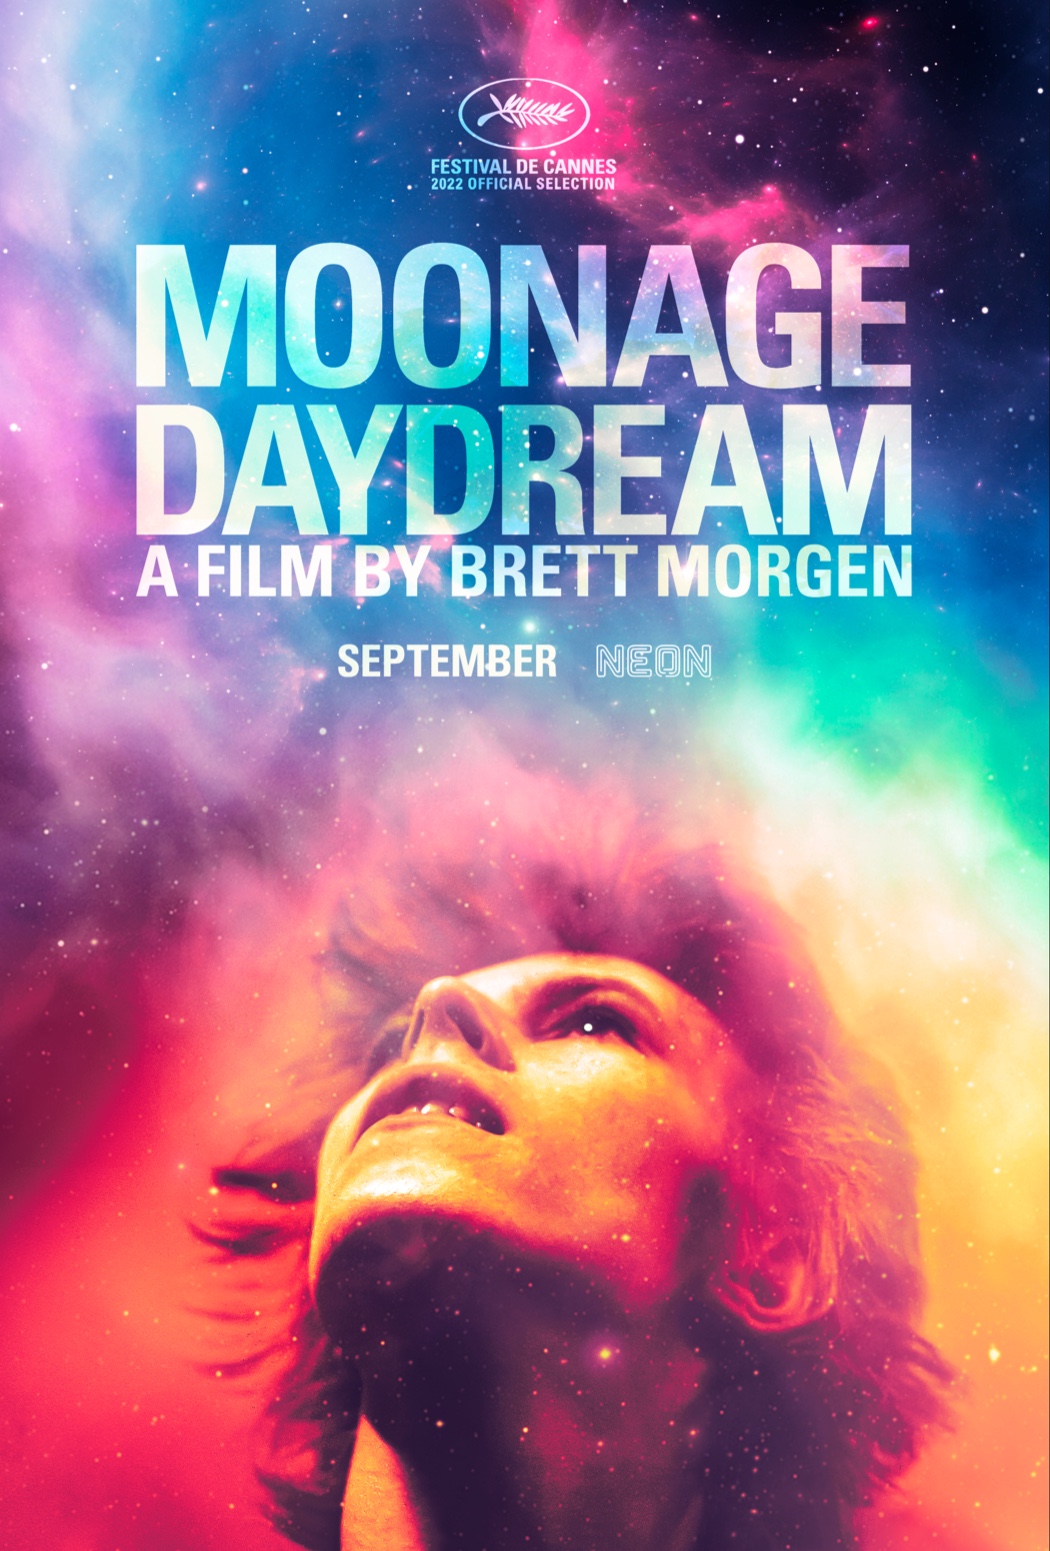 Moonage Daydream. Official Website. September 22 2022